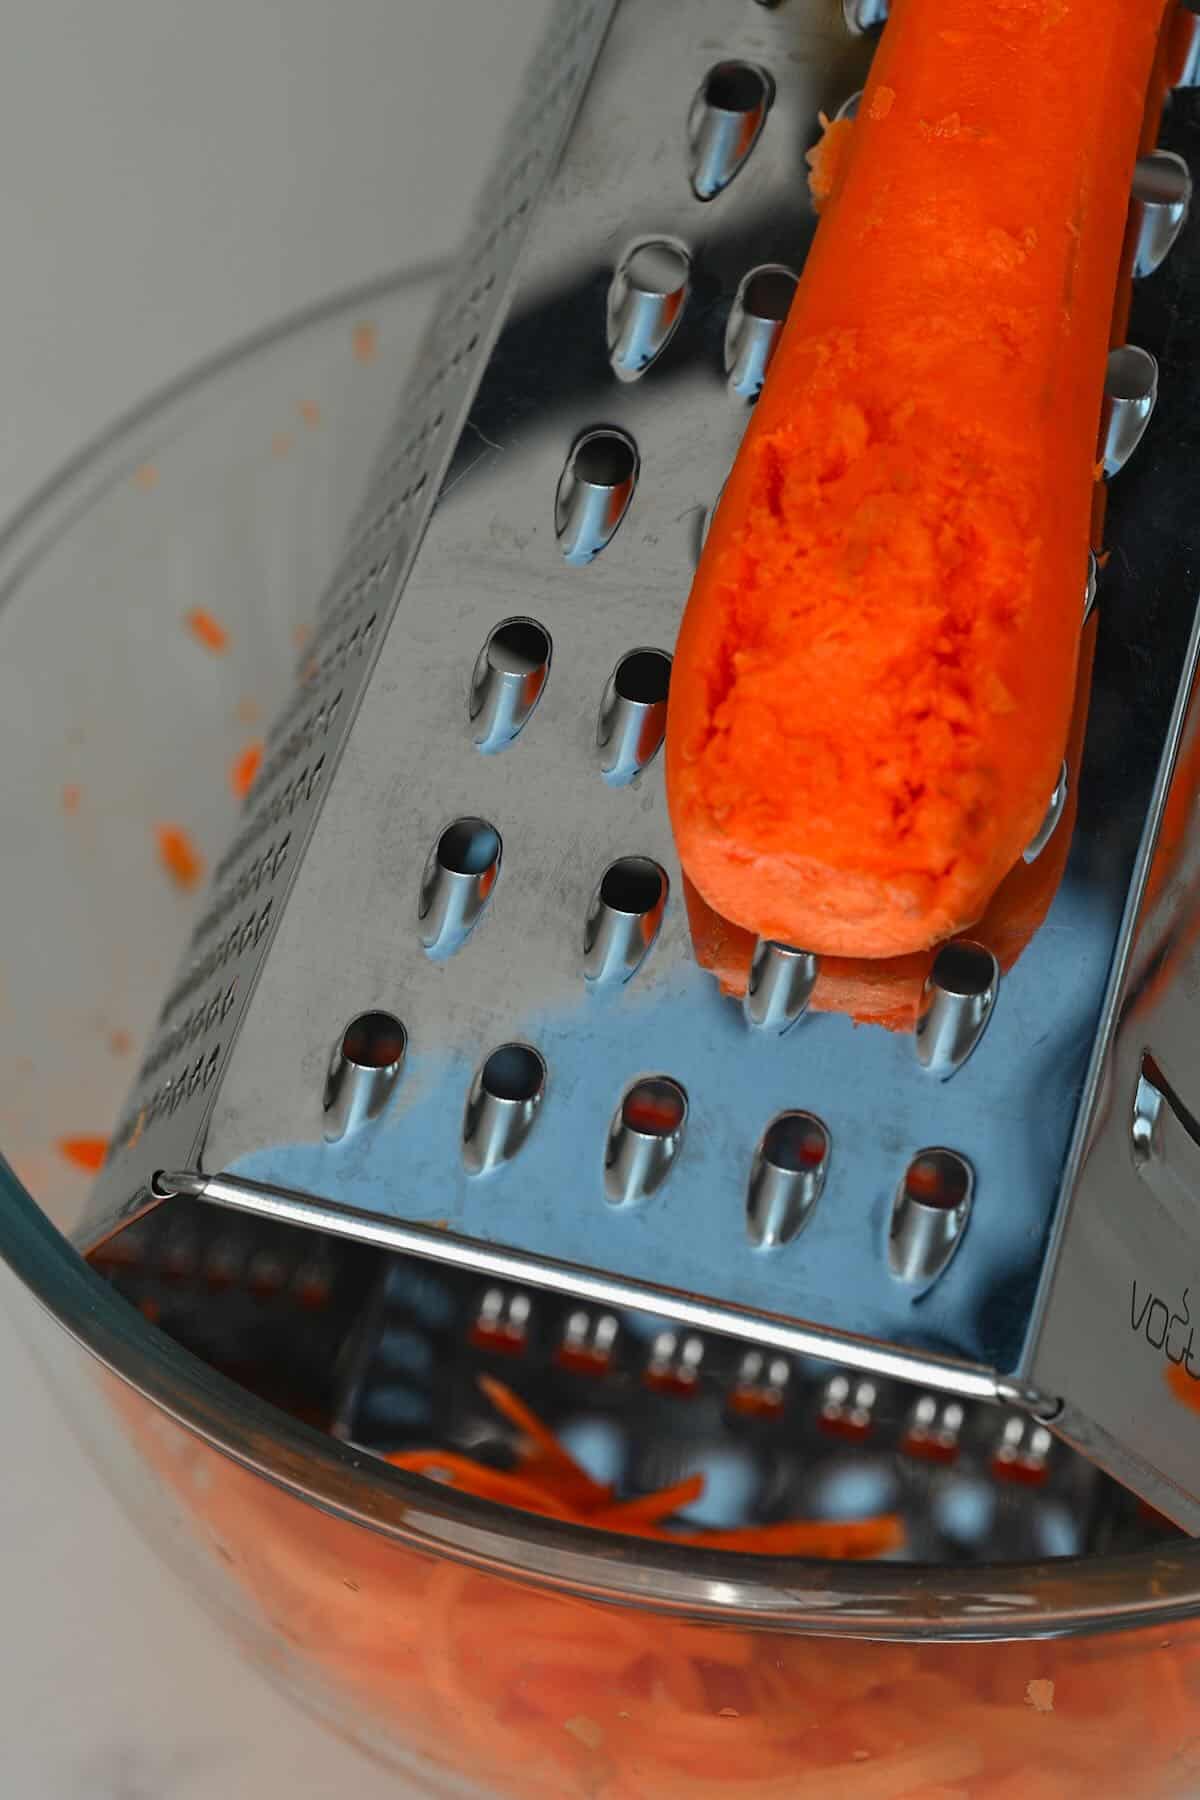 Grating a carrot